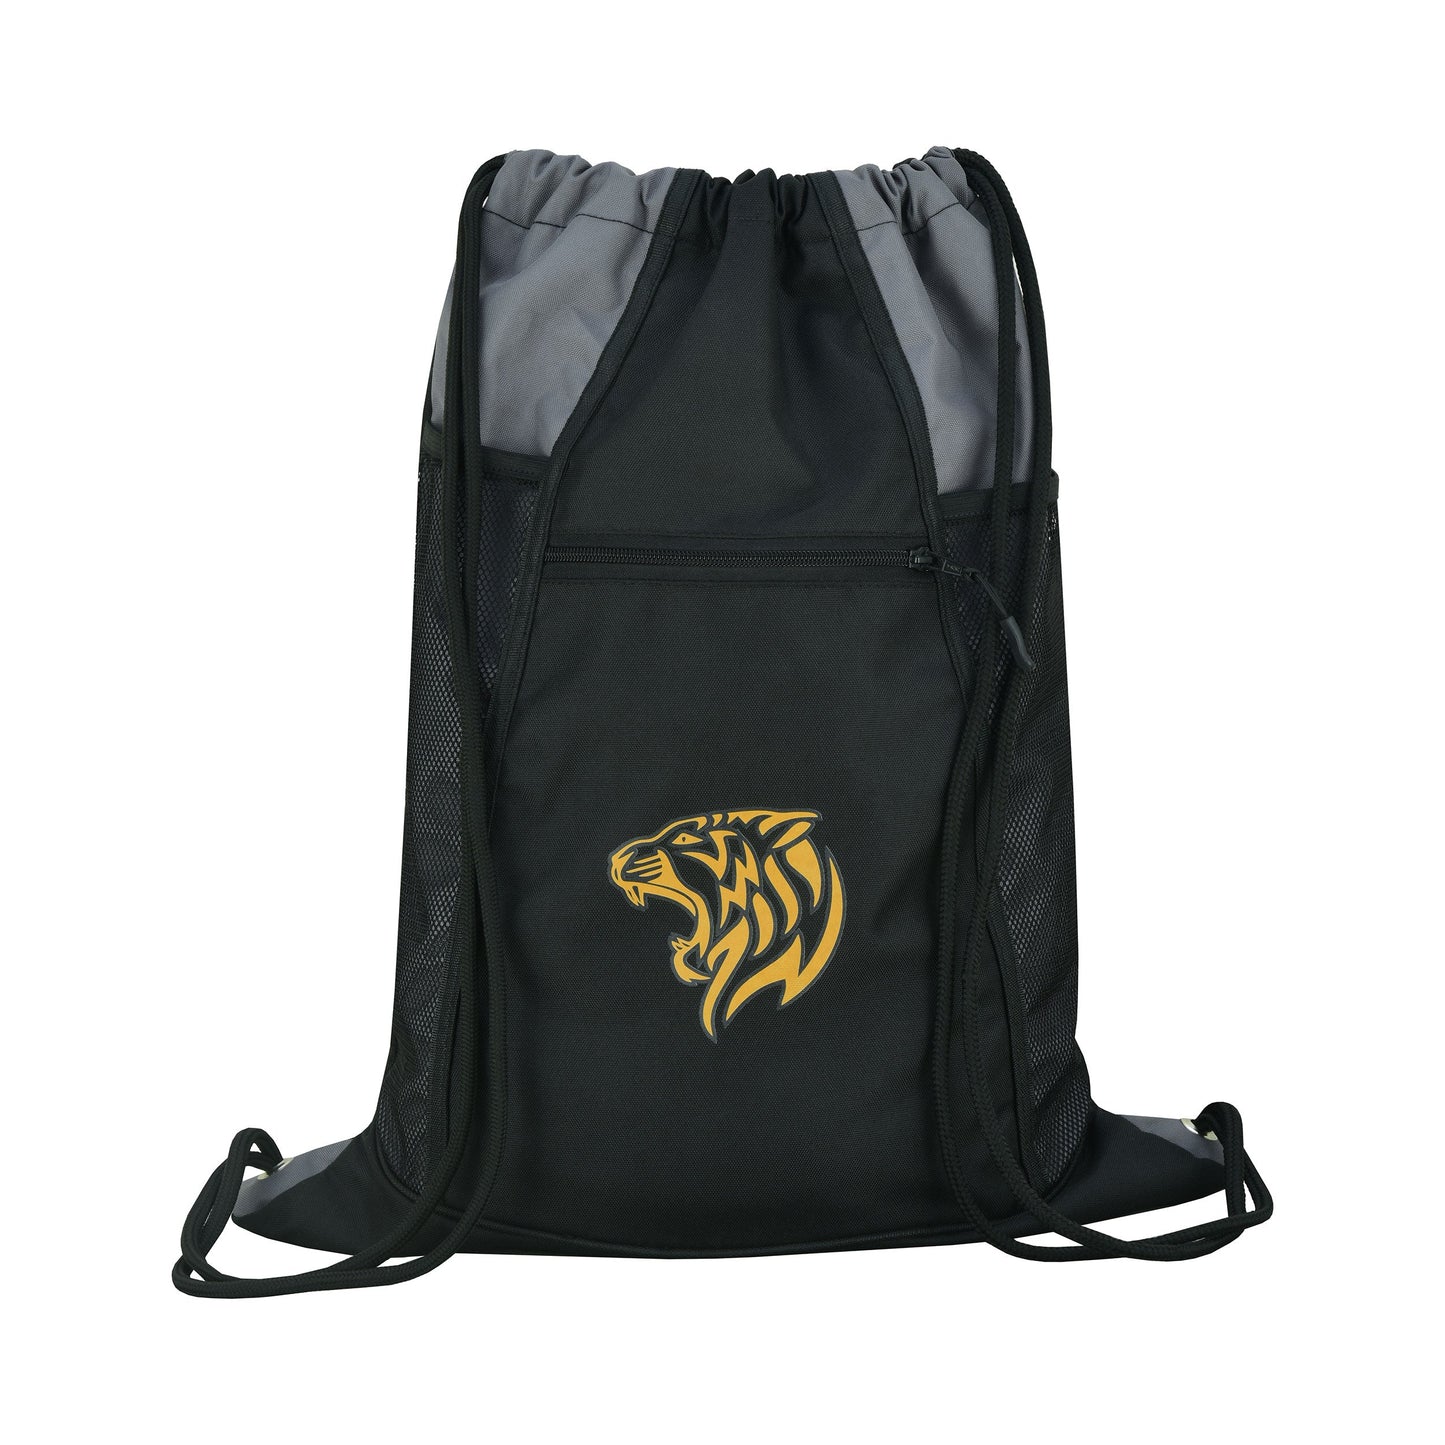 Jaguar Pro Gear - Deluxe Blackout Backpack For Gear Carry (Black)